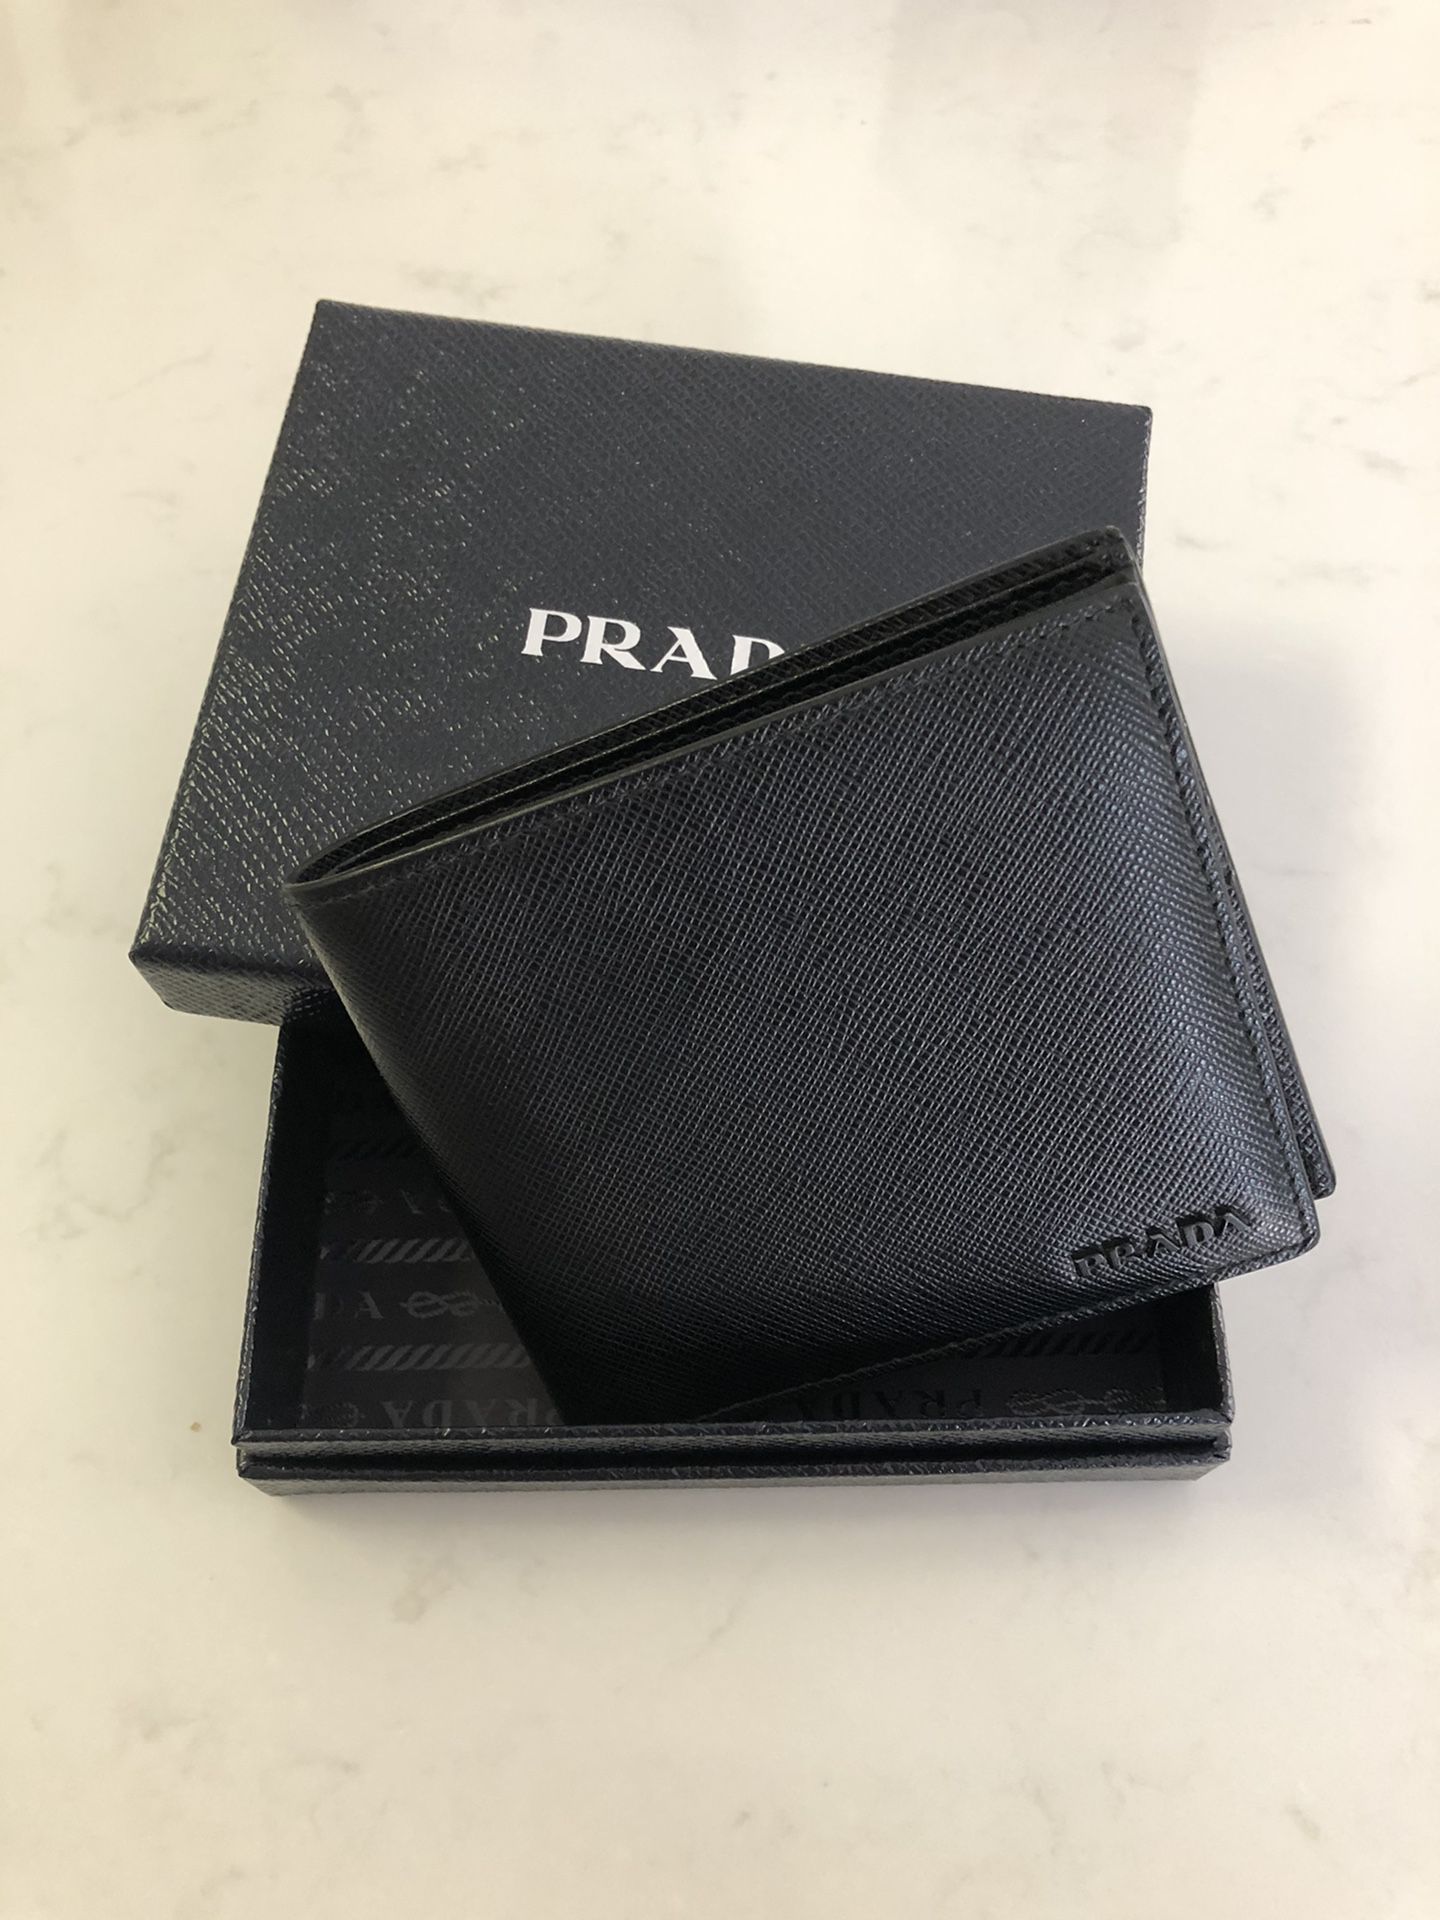 Prada Wallet (Brand New Condition)